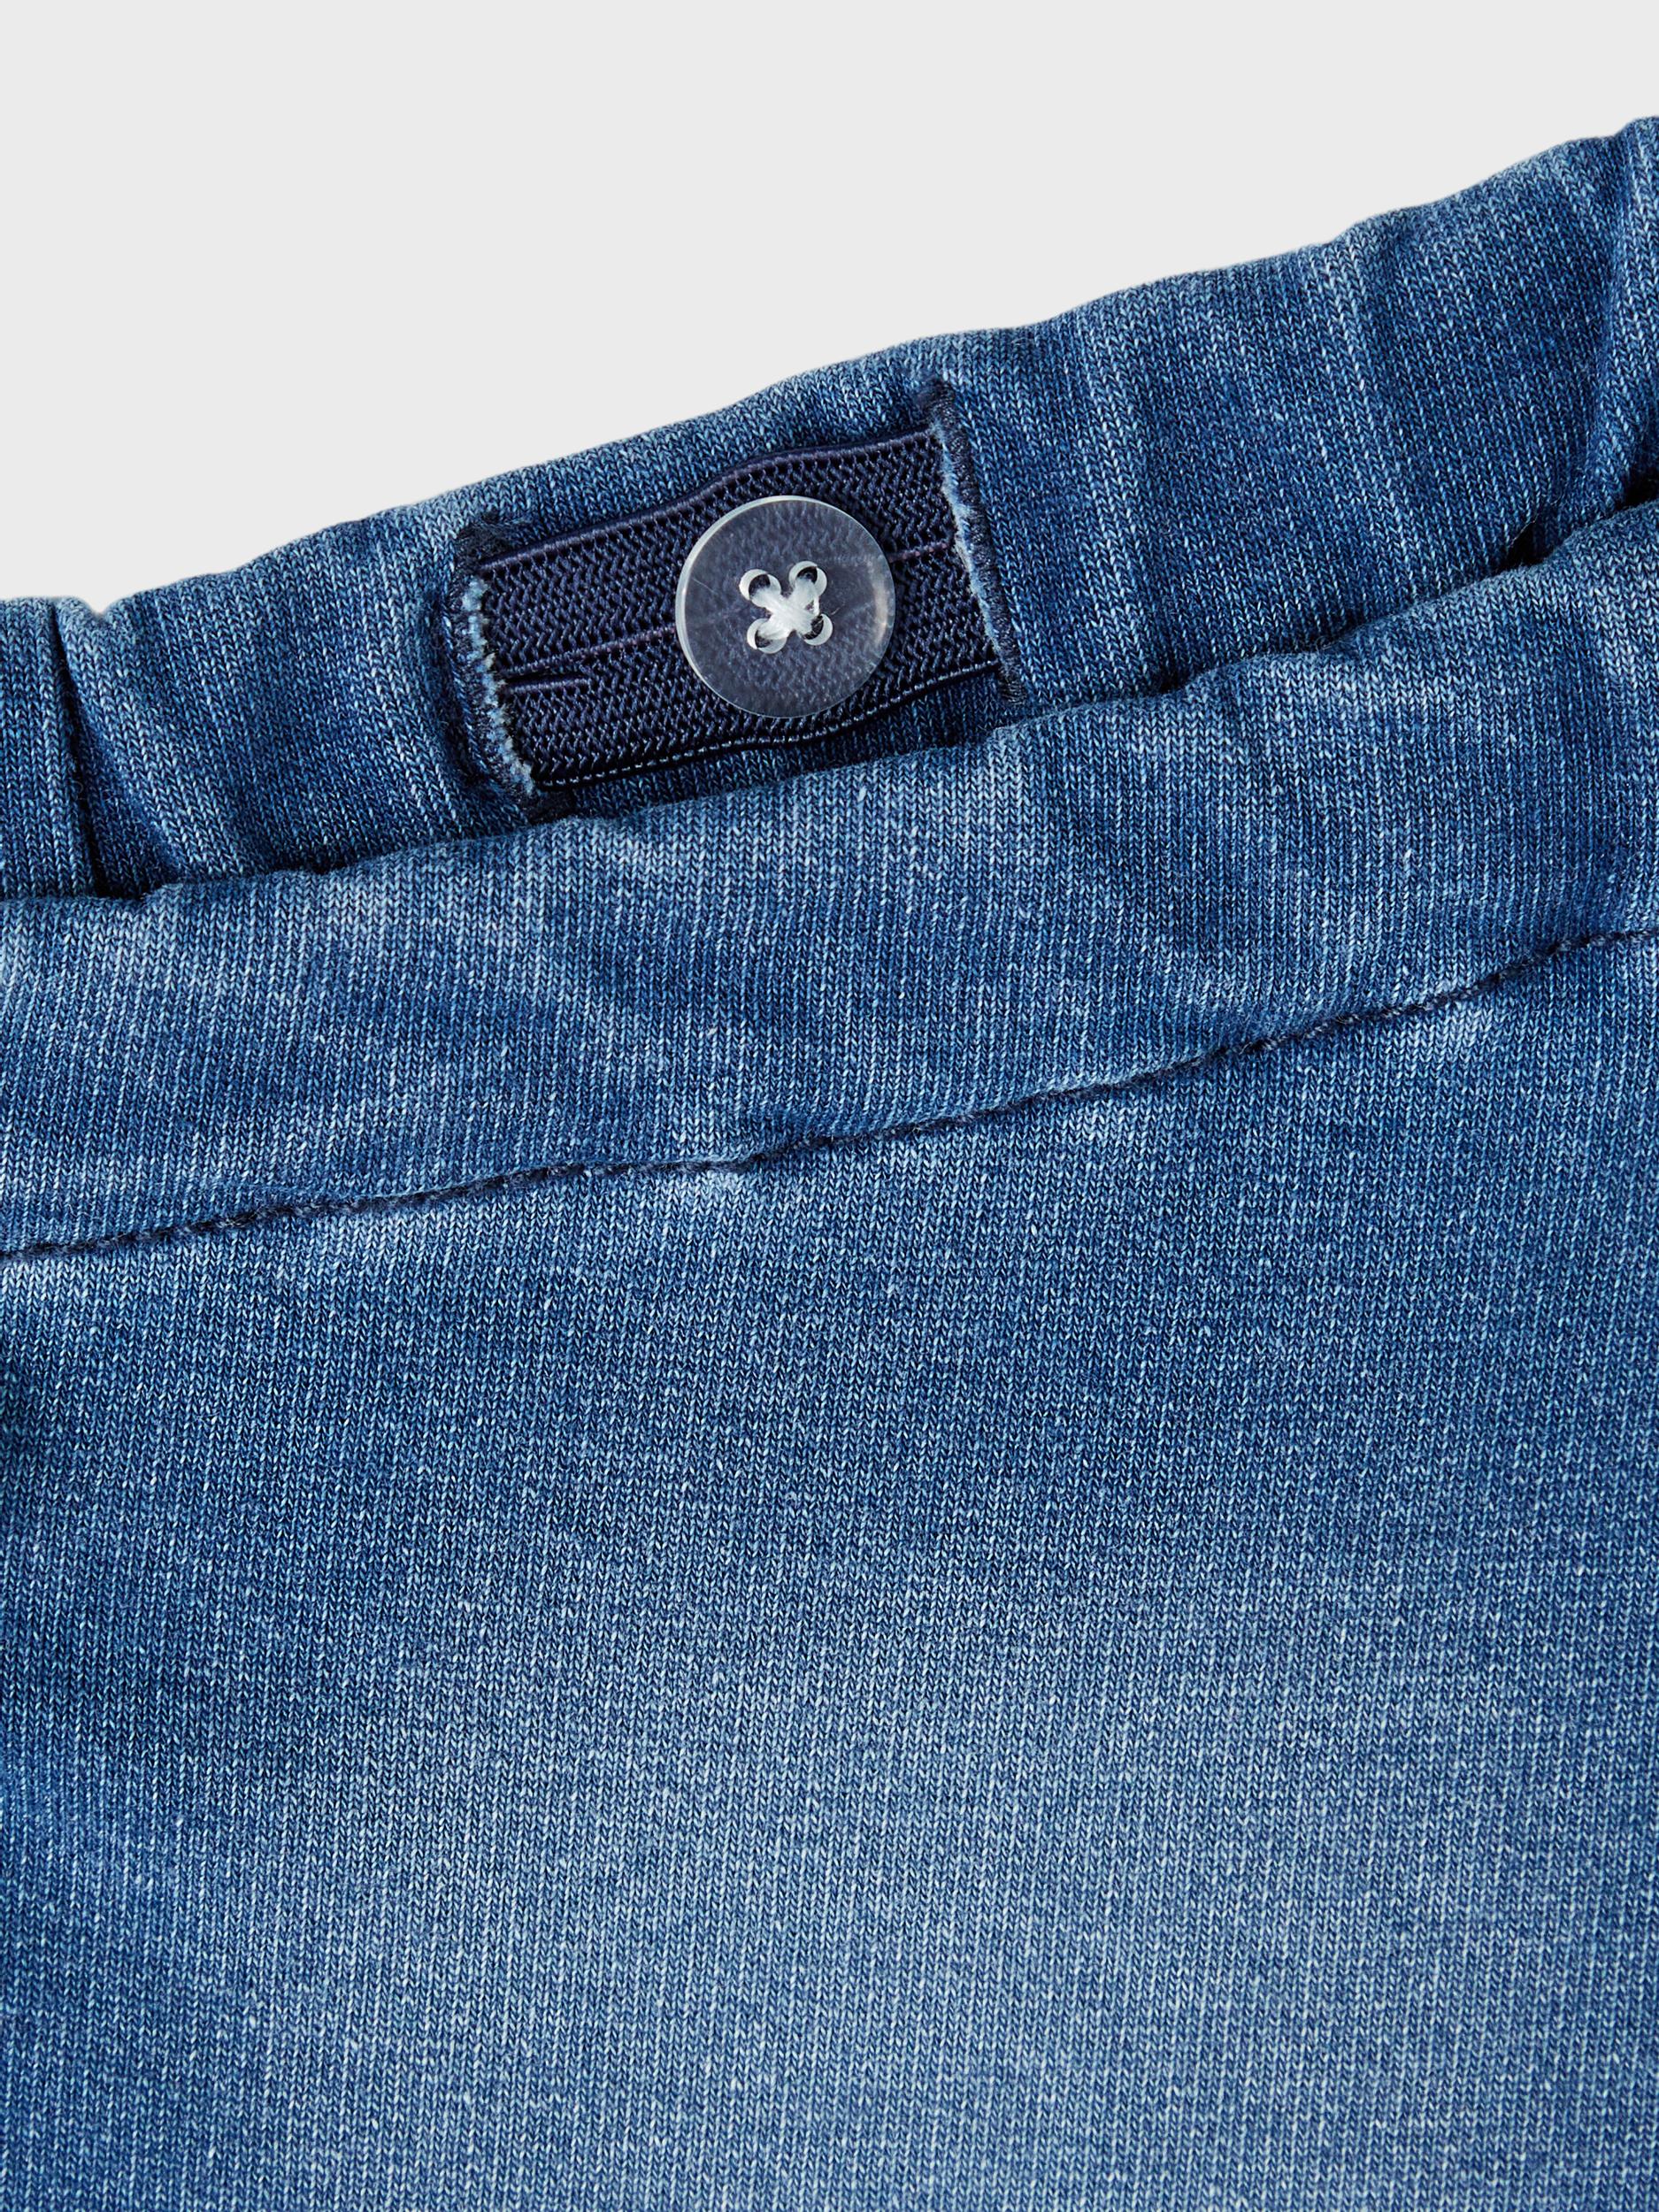 Girl's Bella Shaped R Sweat Jeans 2404 - Medium Blue Denim-Close Up View